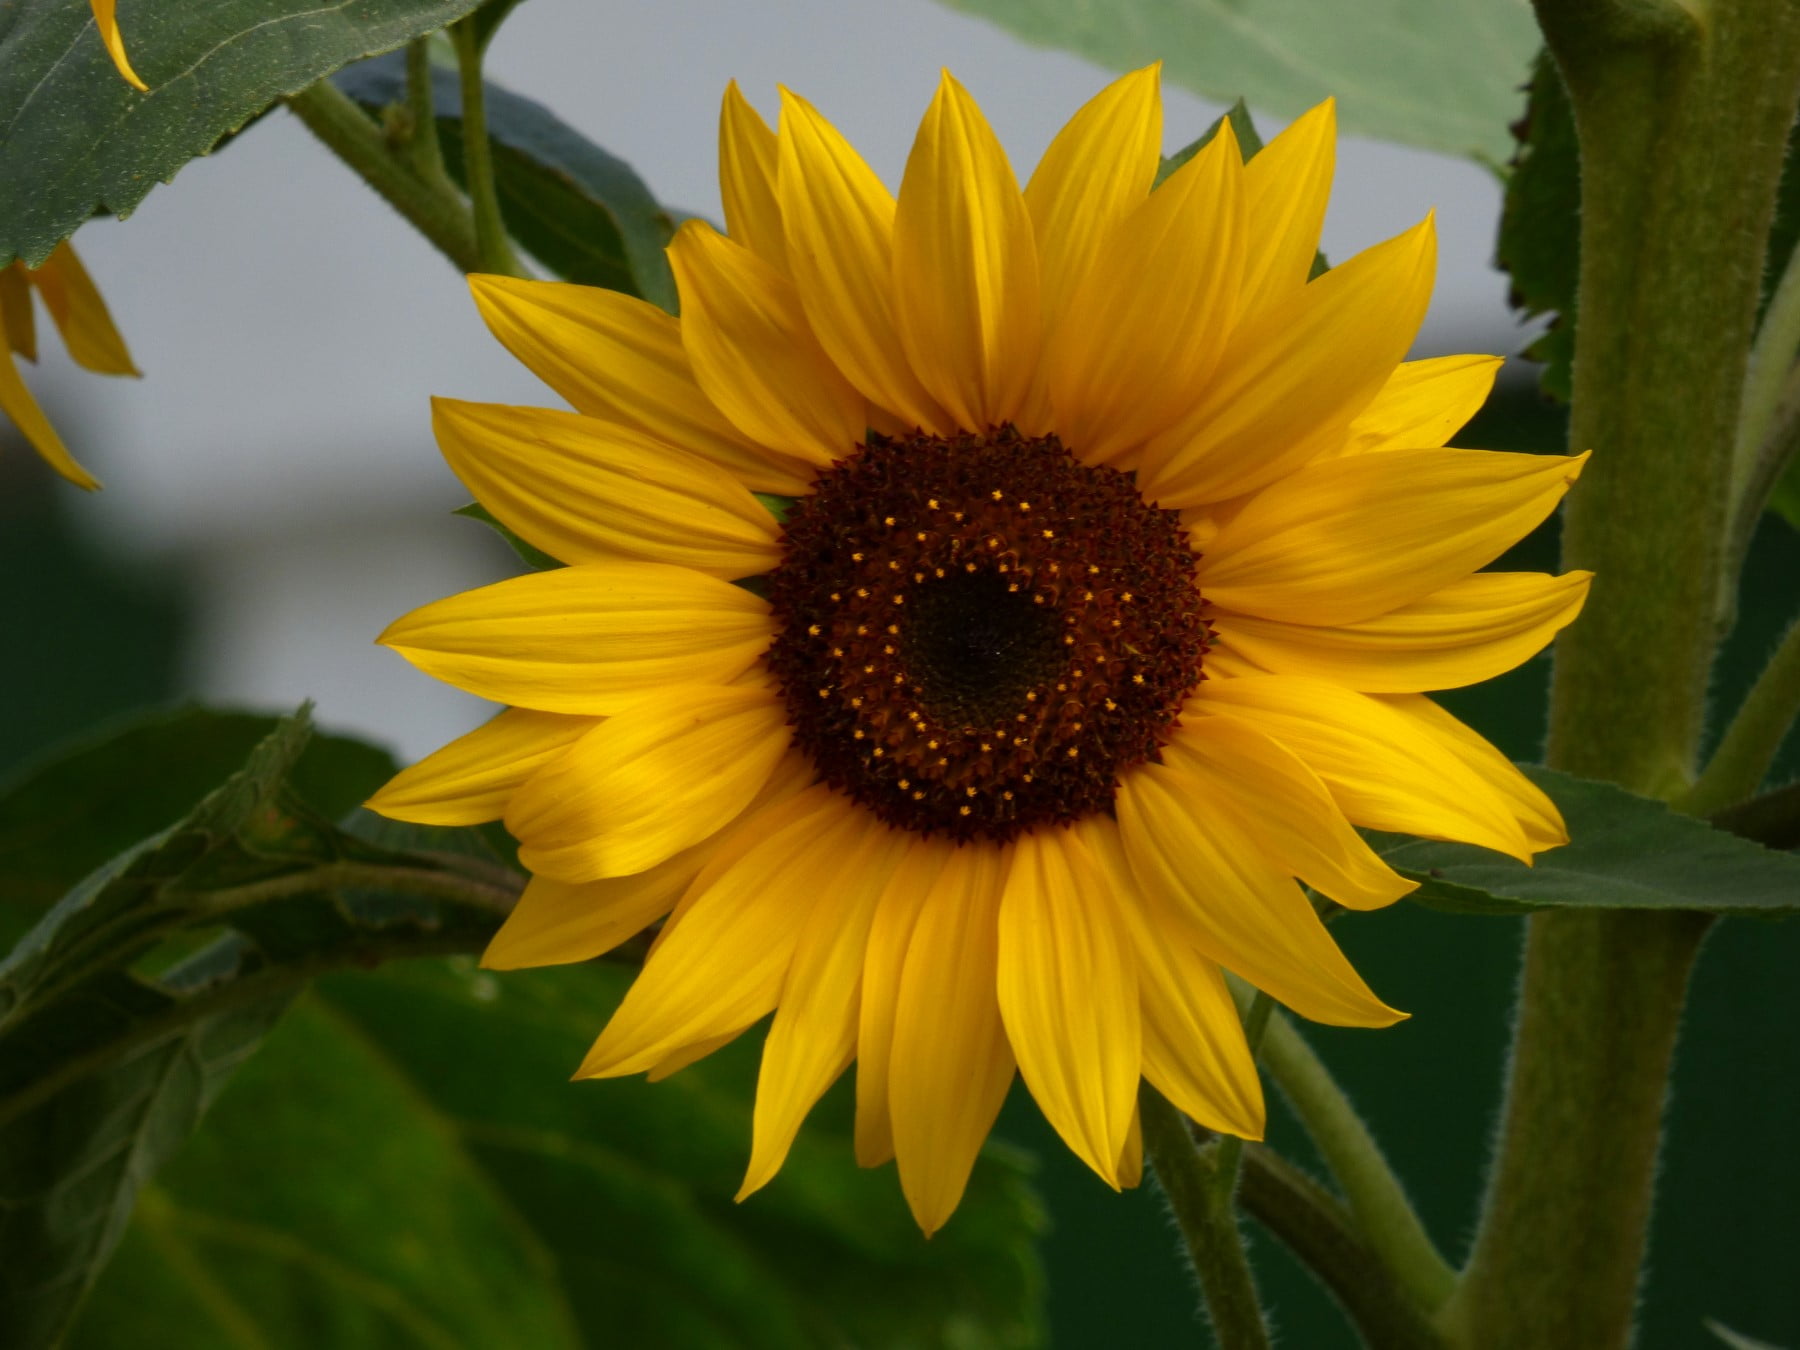 close up photograph of sunflower